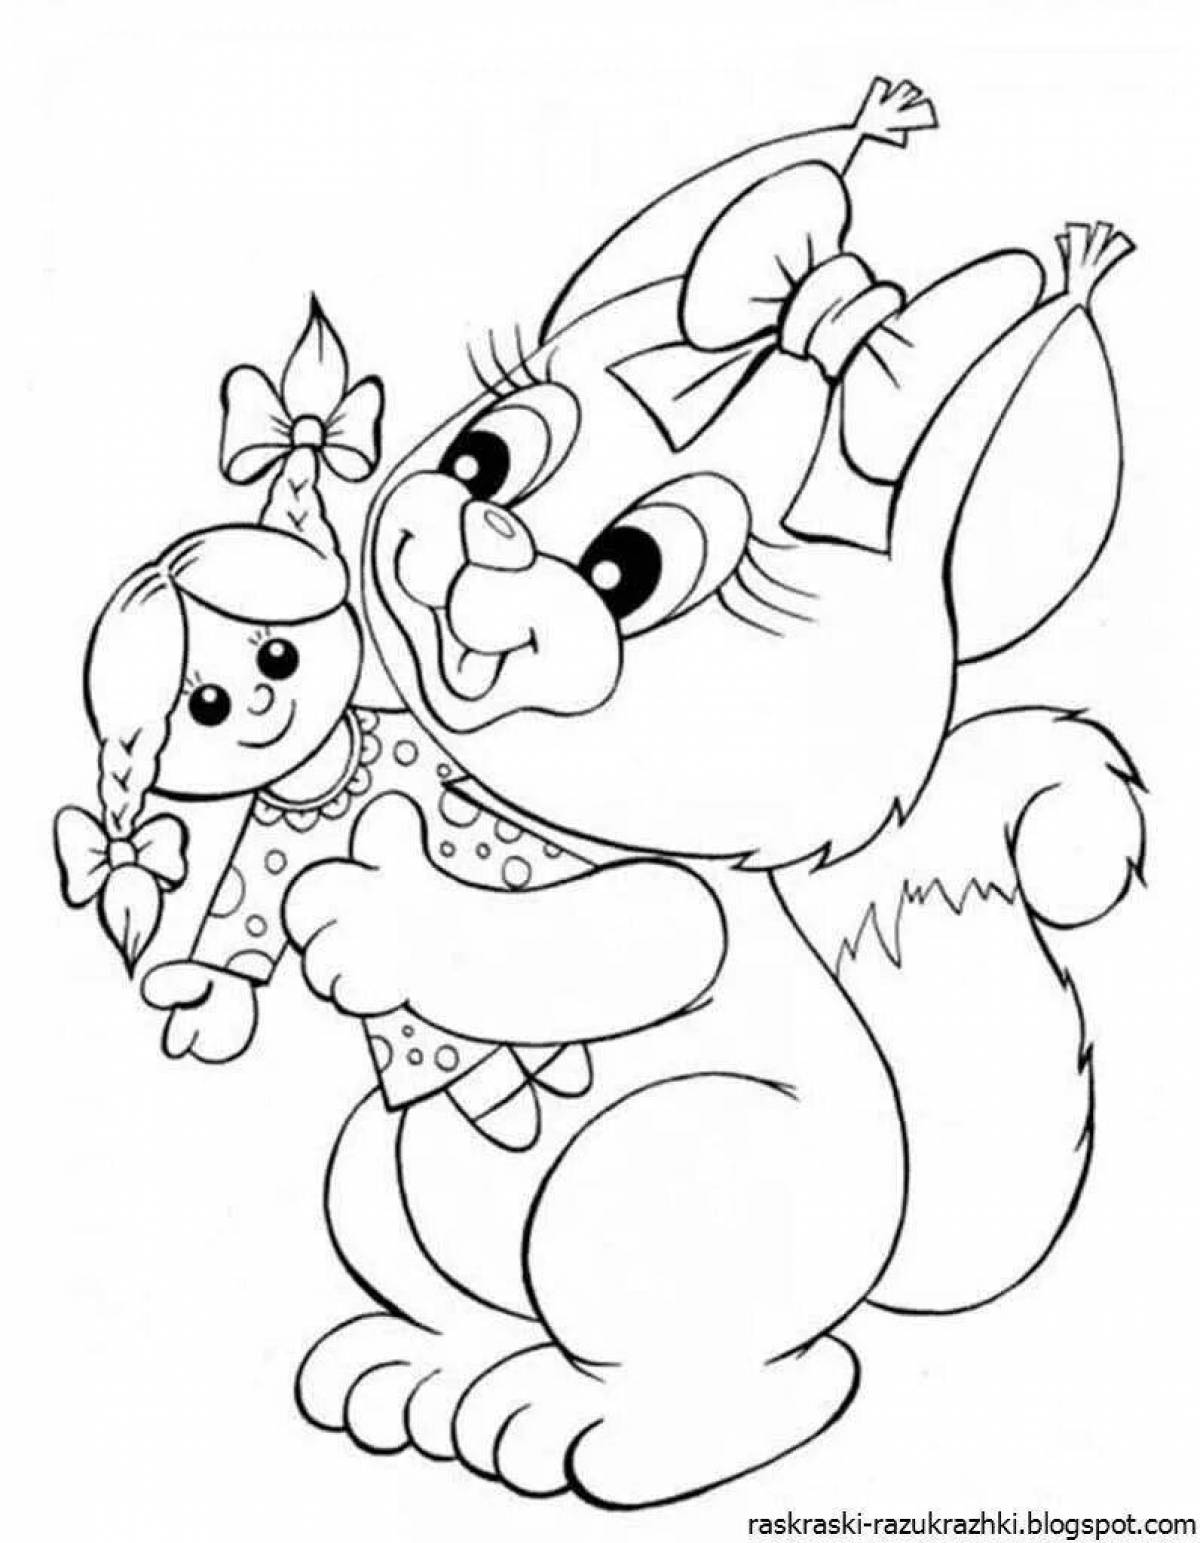 Magic squirrel coloring book for kids